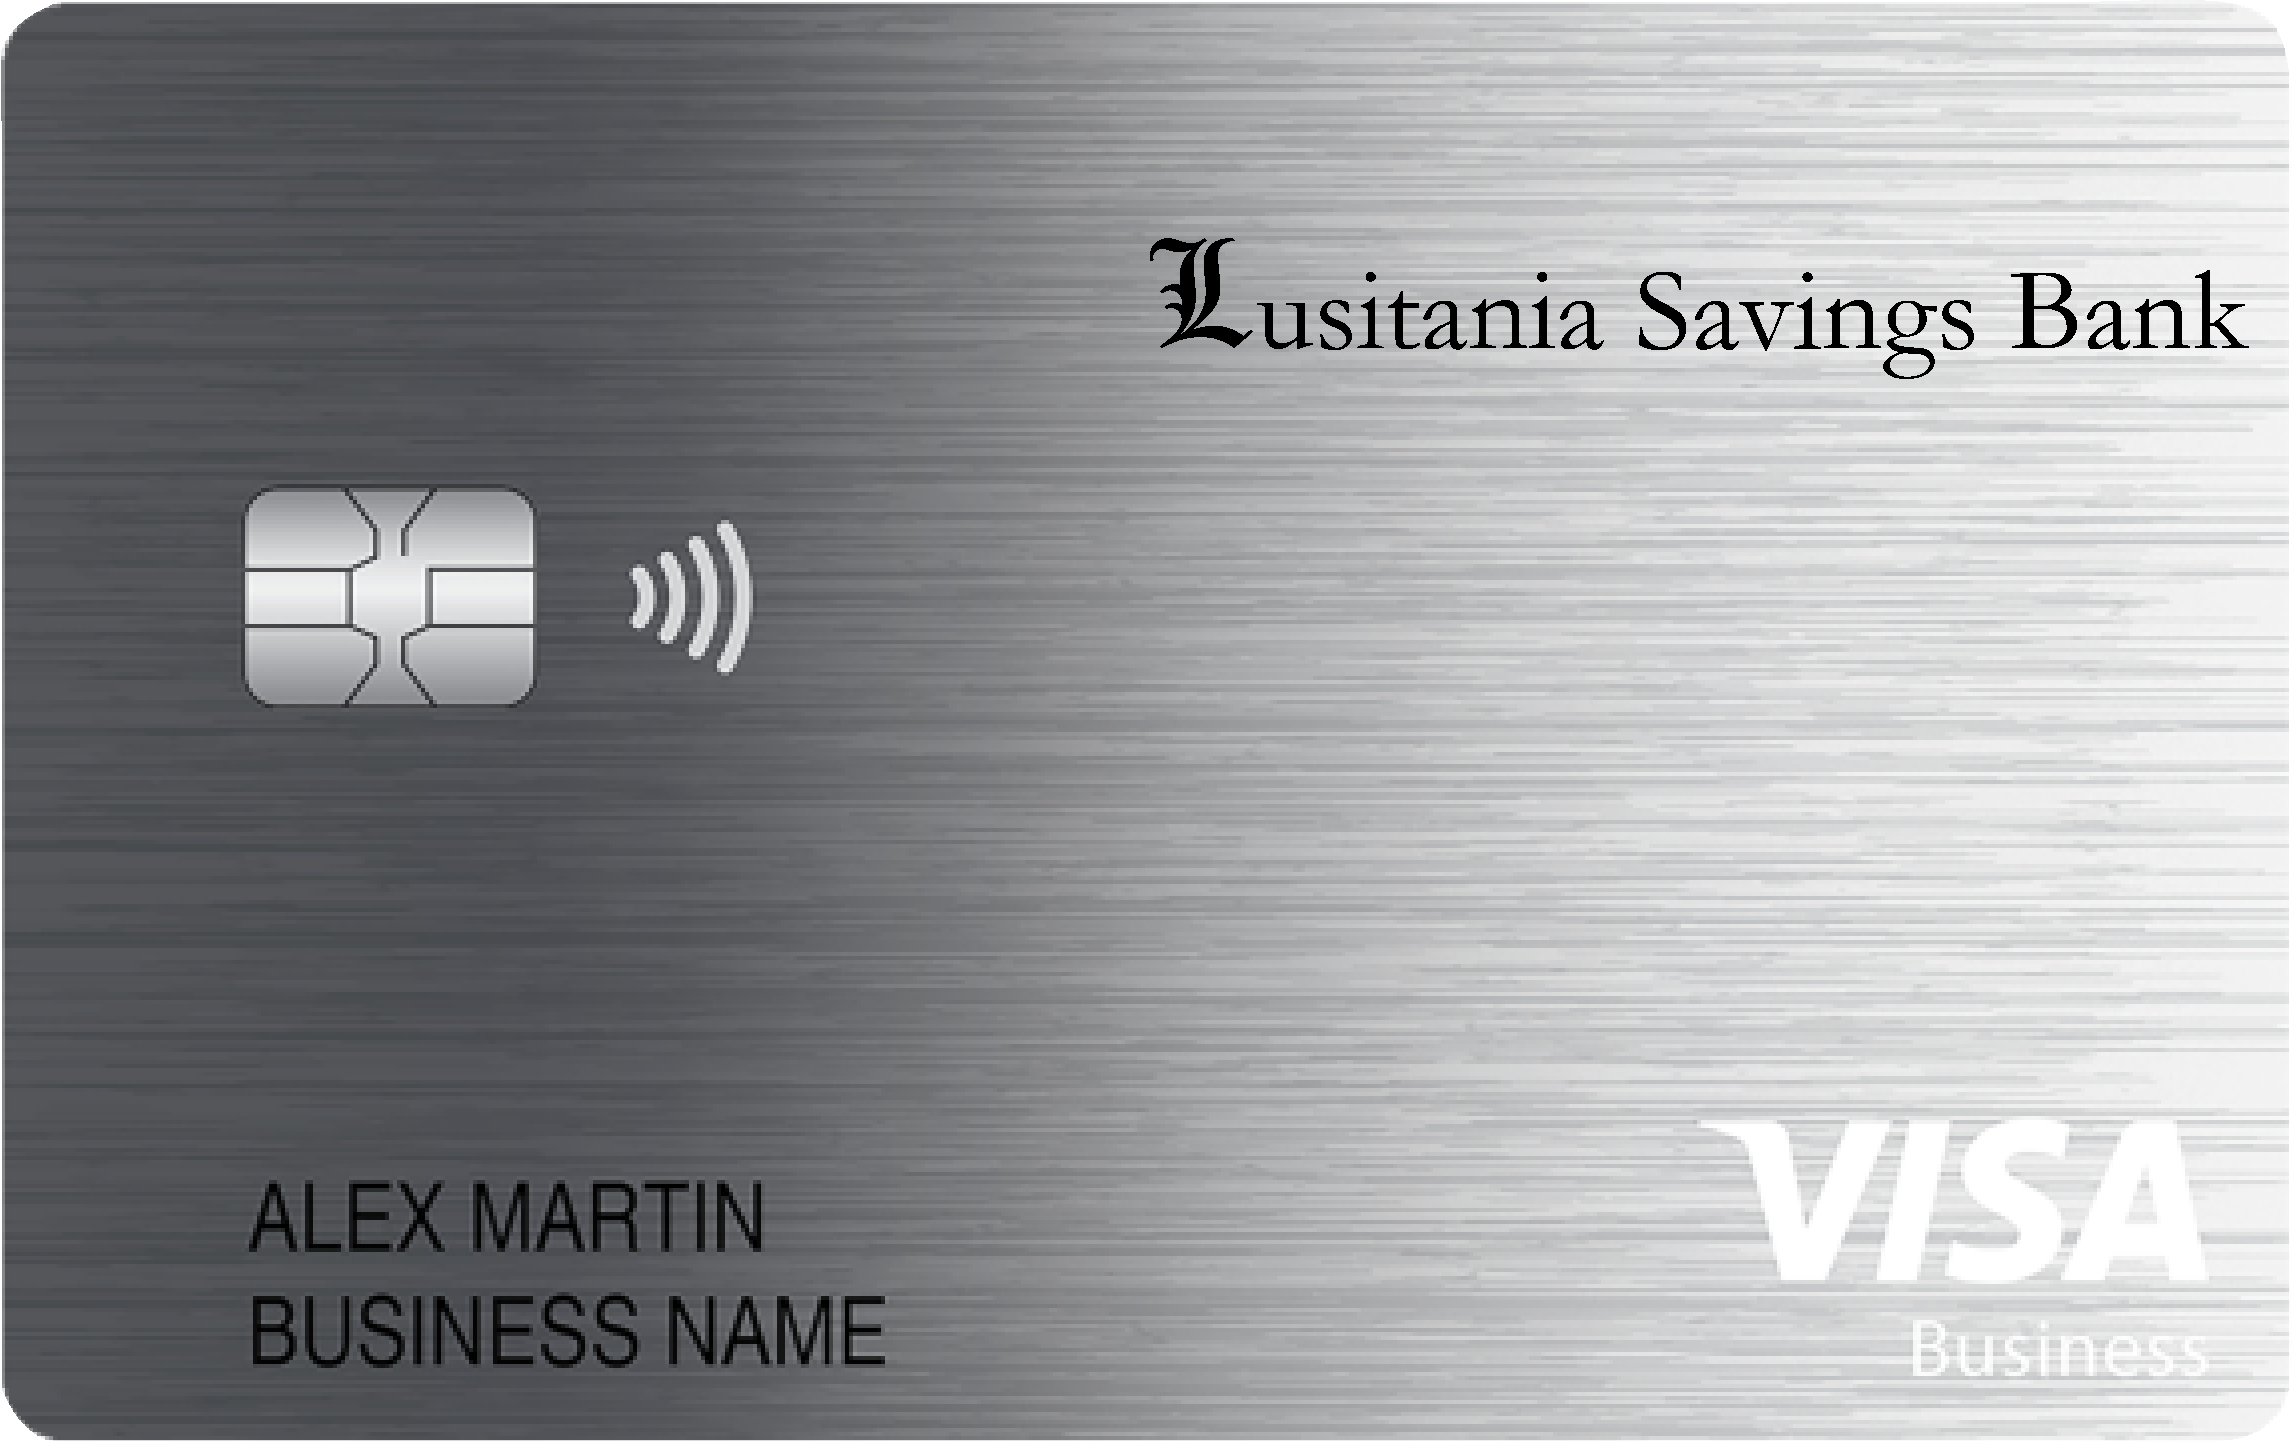 Lusitania Savings Bank Business Real Rewards Card